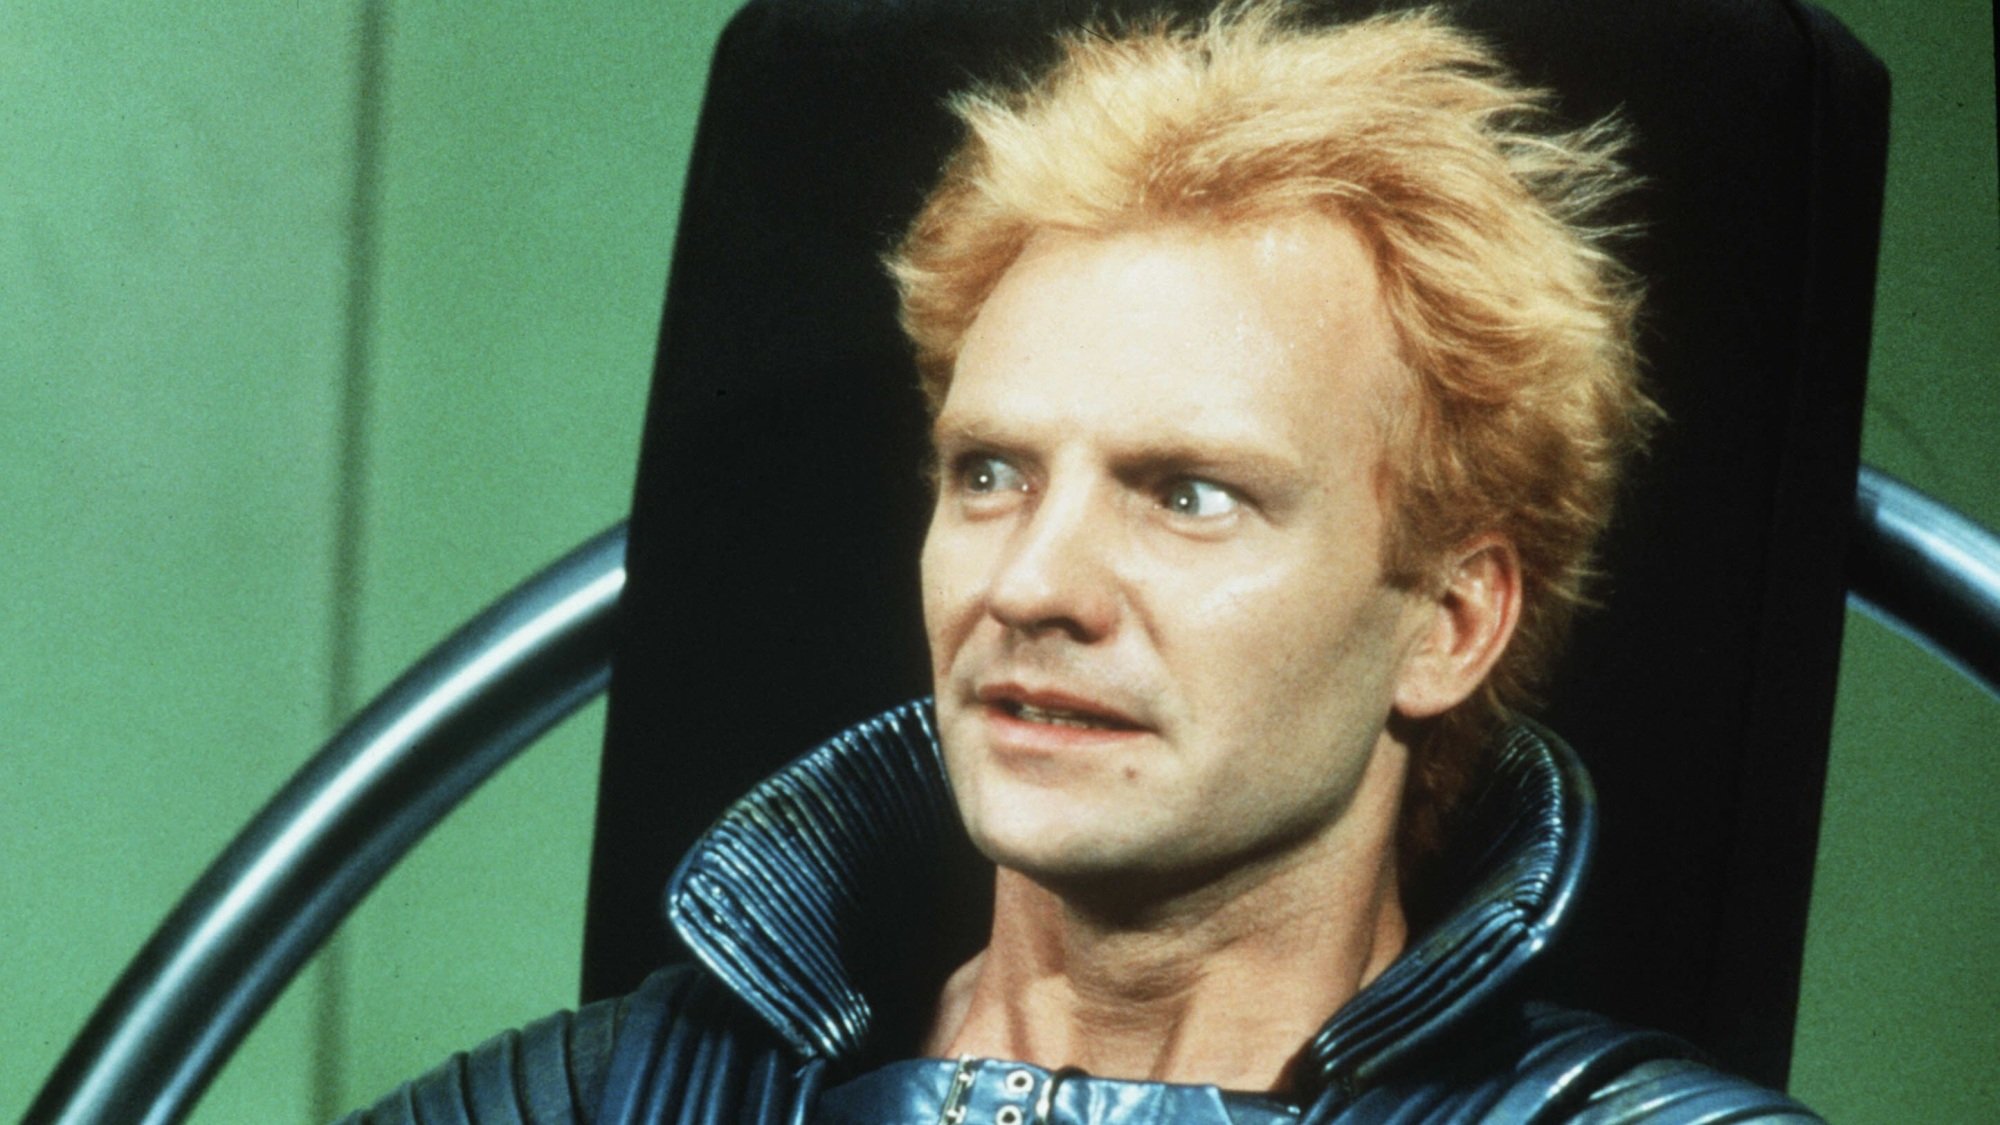 Sting as Feyd-Rautha Harkonnen in "Dune."